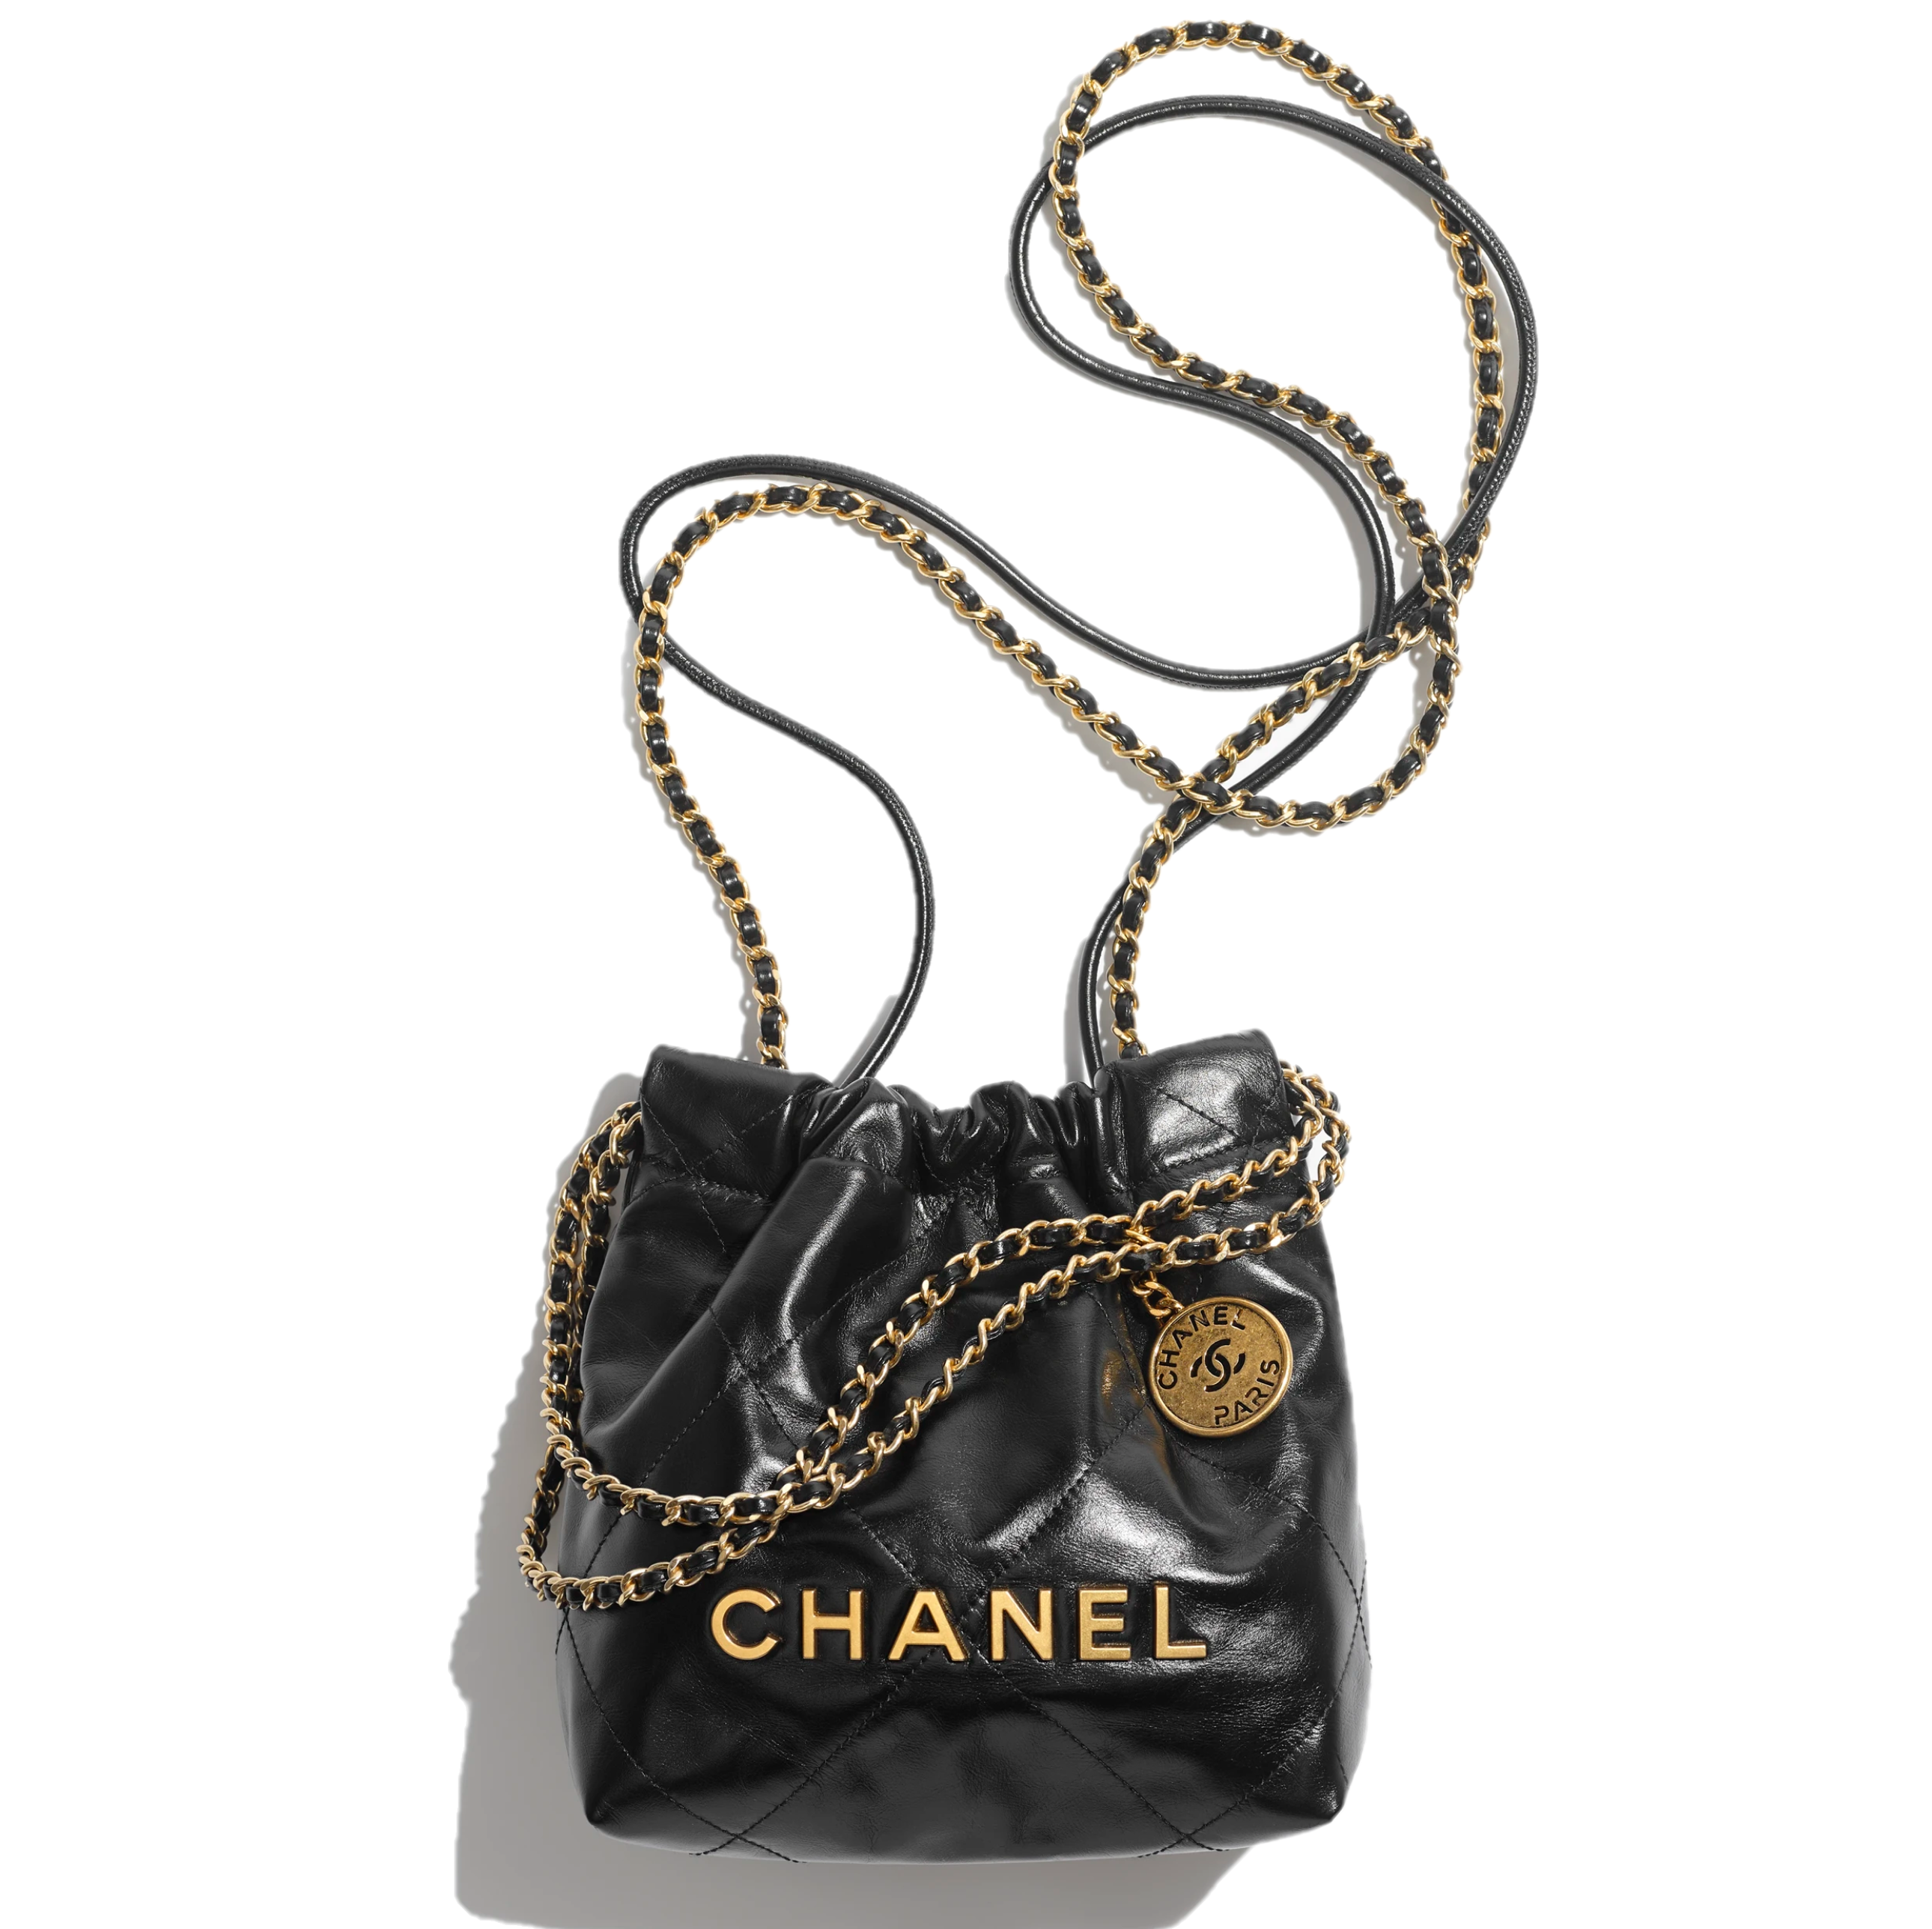 Phấn phủ dạng bột Chanel Poudre Universelle  Boutique de Paris  Mỹ phẩm  xách tay Pháp